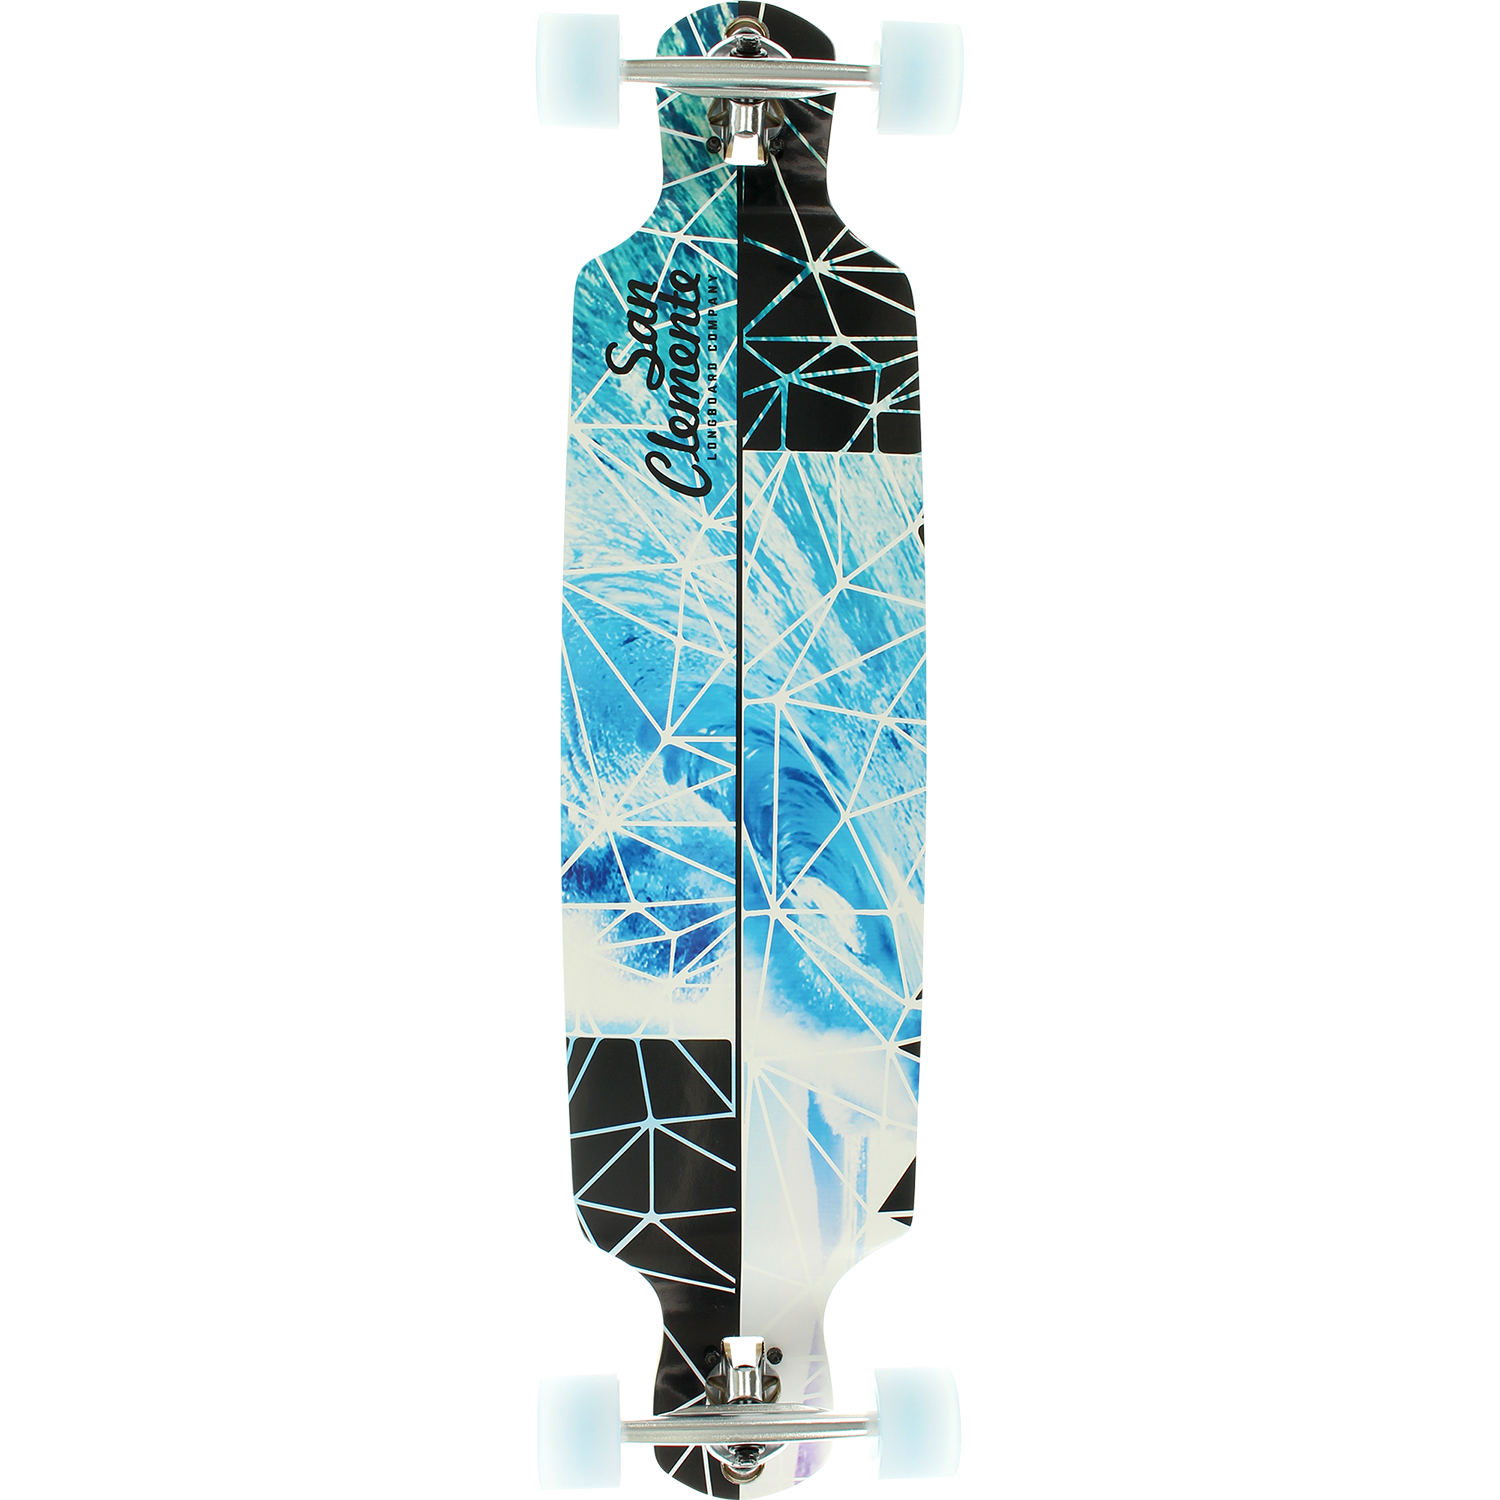 San Clemente Broken Glass Drop Down Complete Skateboard - 9x39 